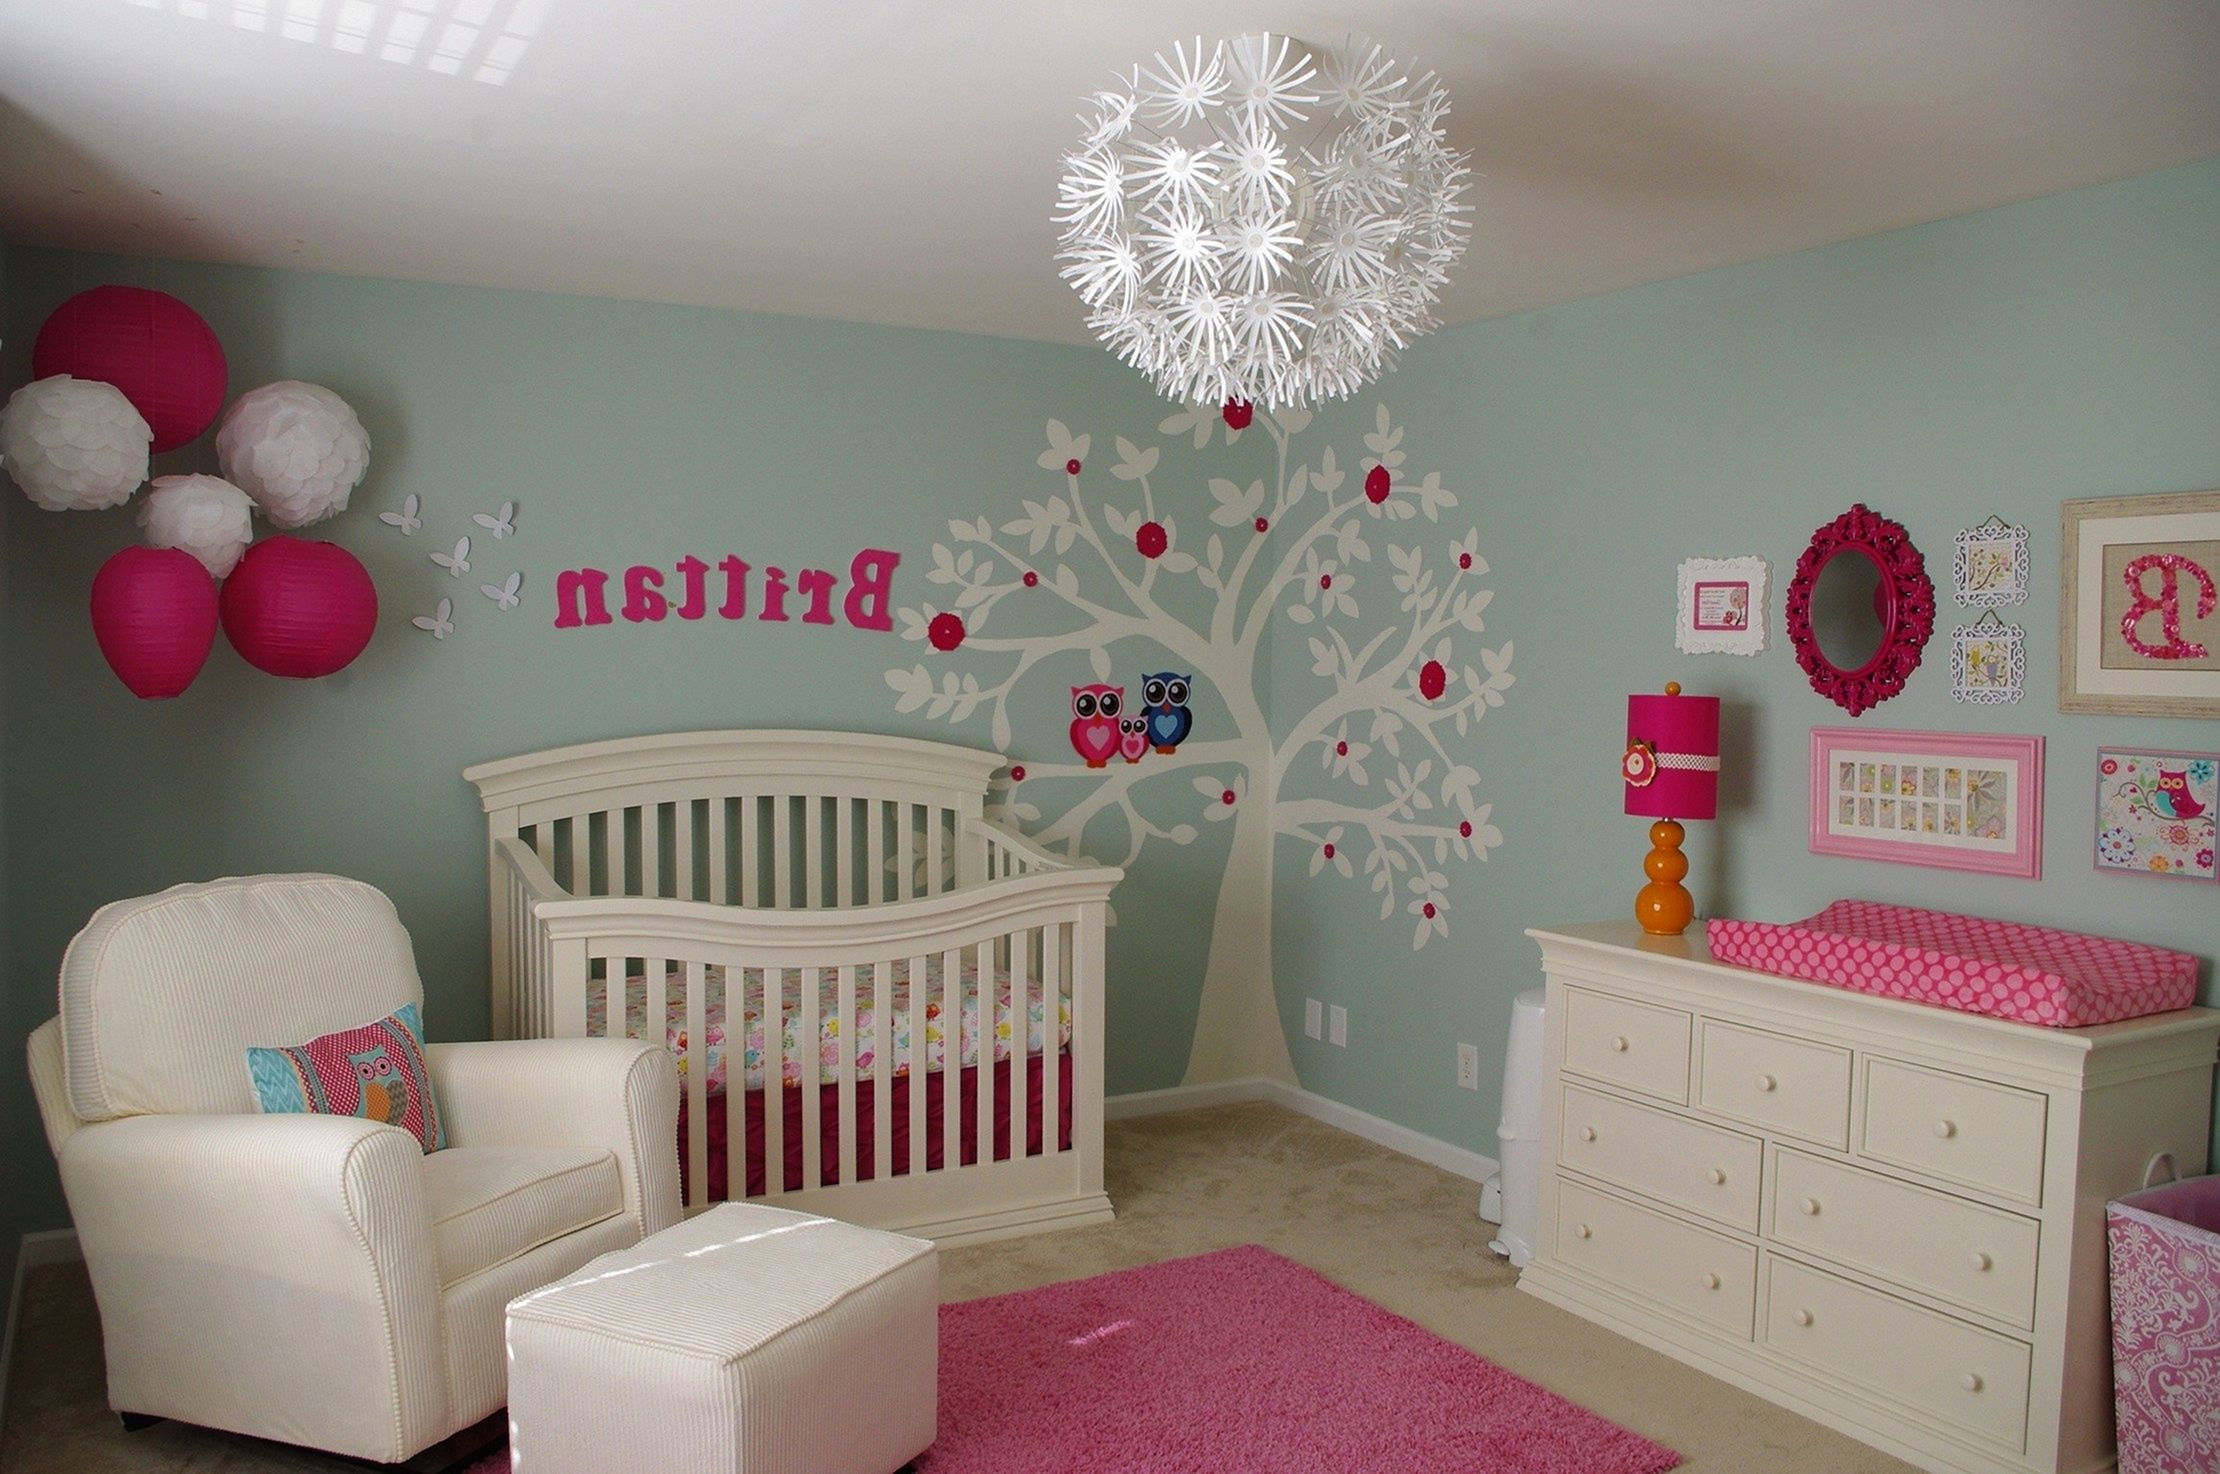 Girls DIY Room Decor
 DIY Baby Room Decor Ideas For Girls DIY Baby Room Decor